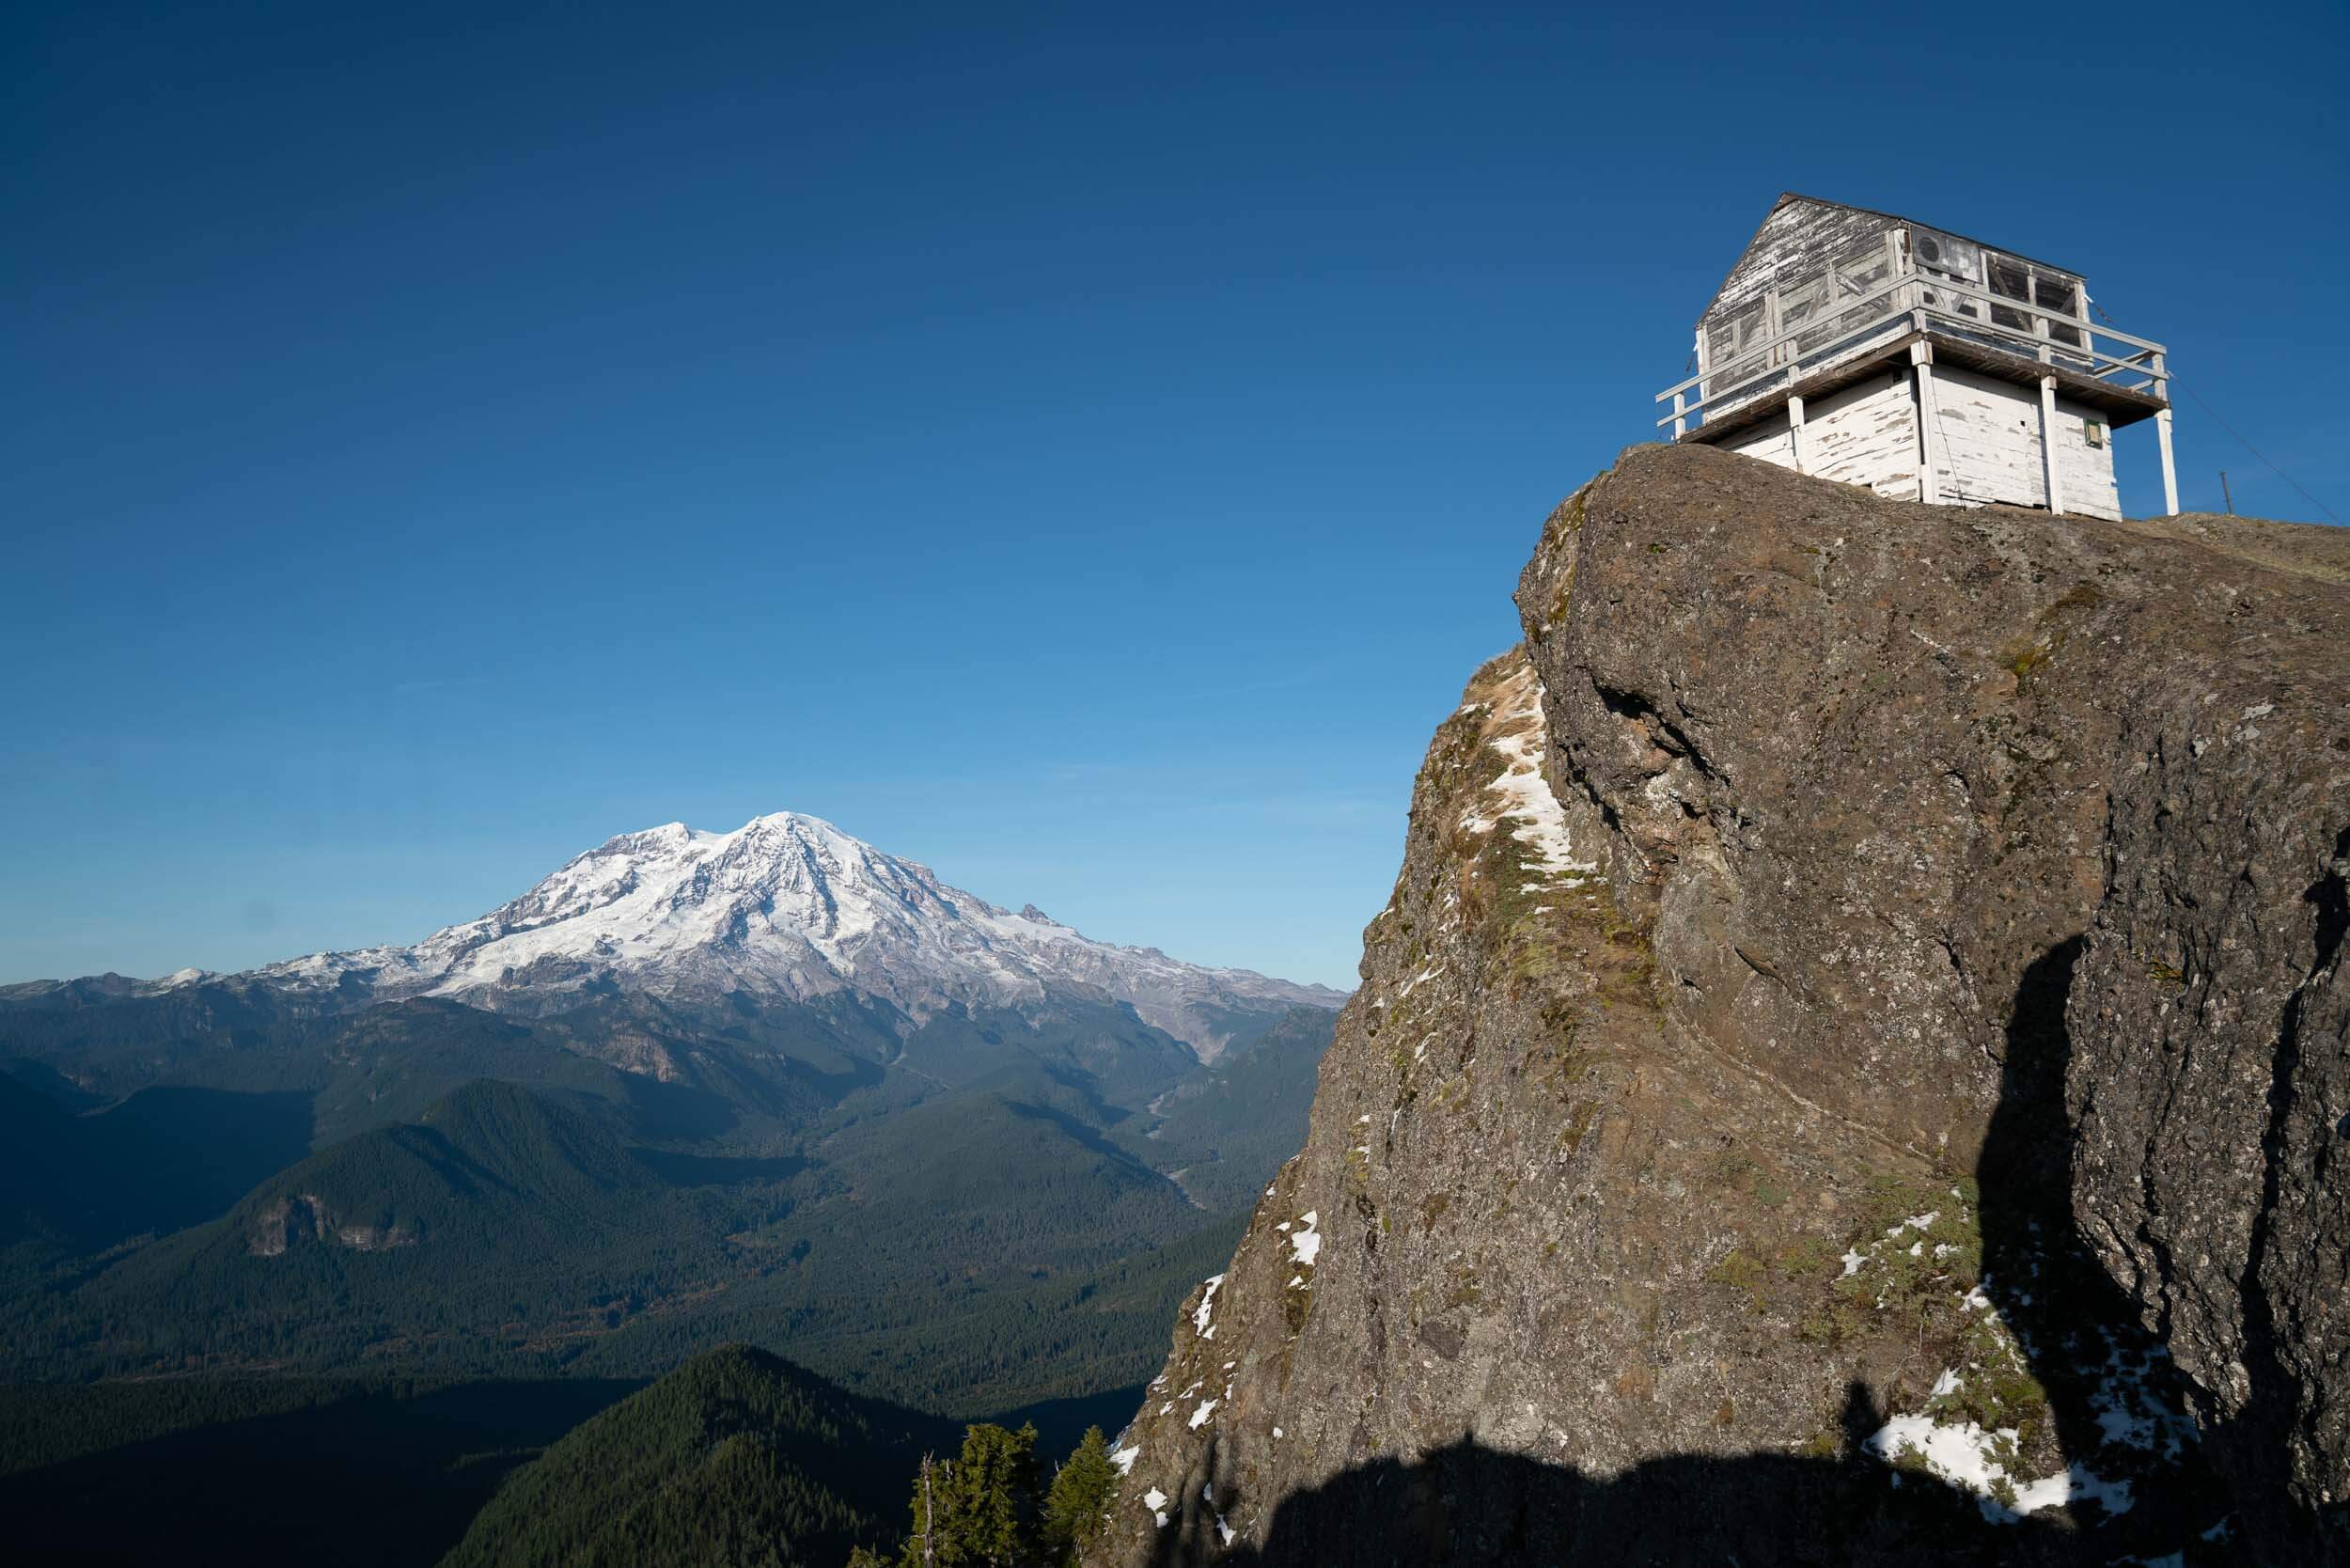 High Rock Lookout has beautiful views of Mount Rainier.